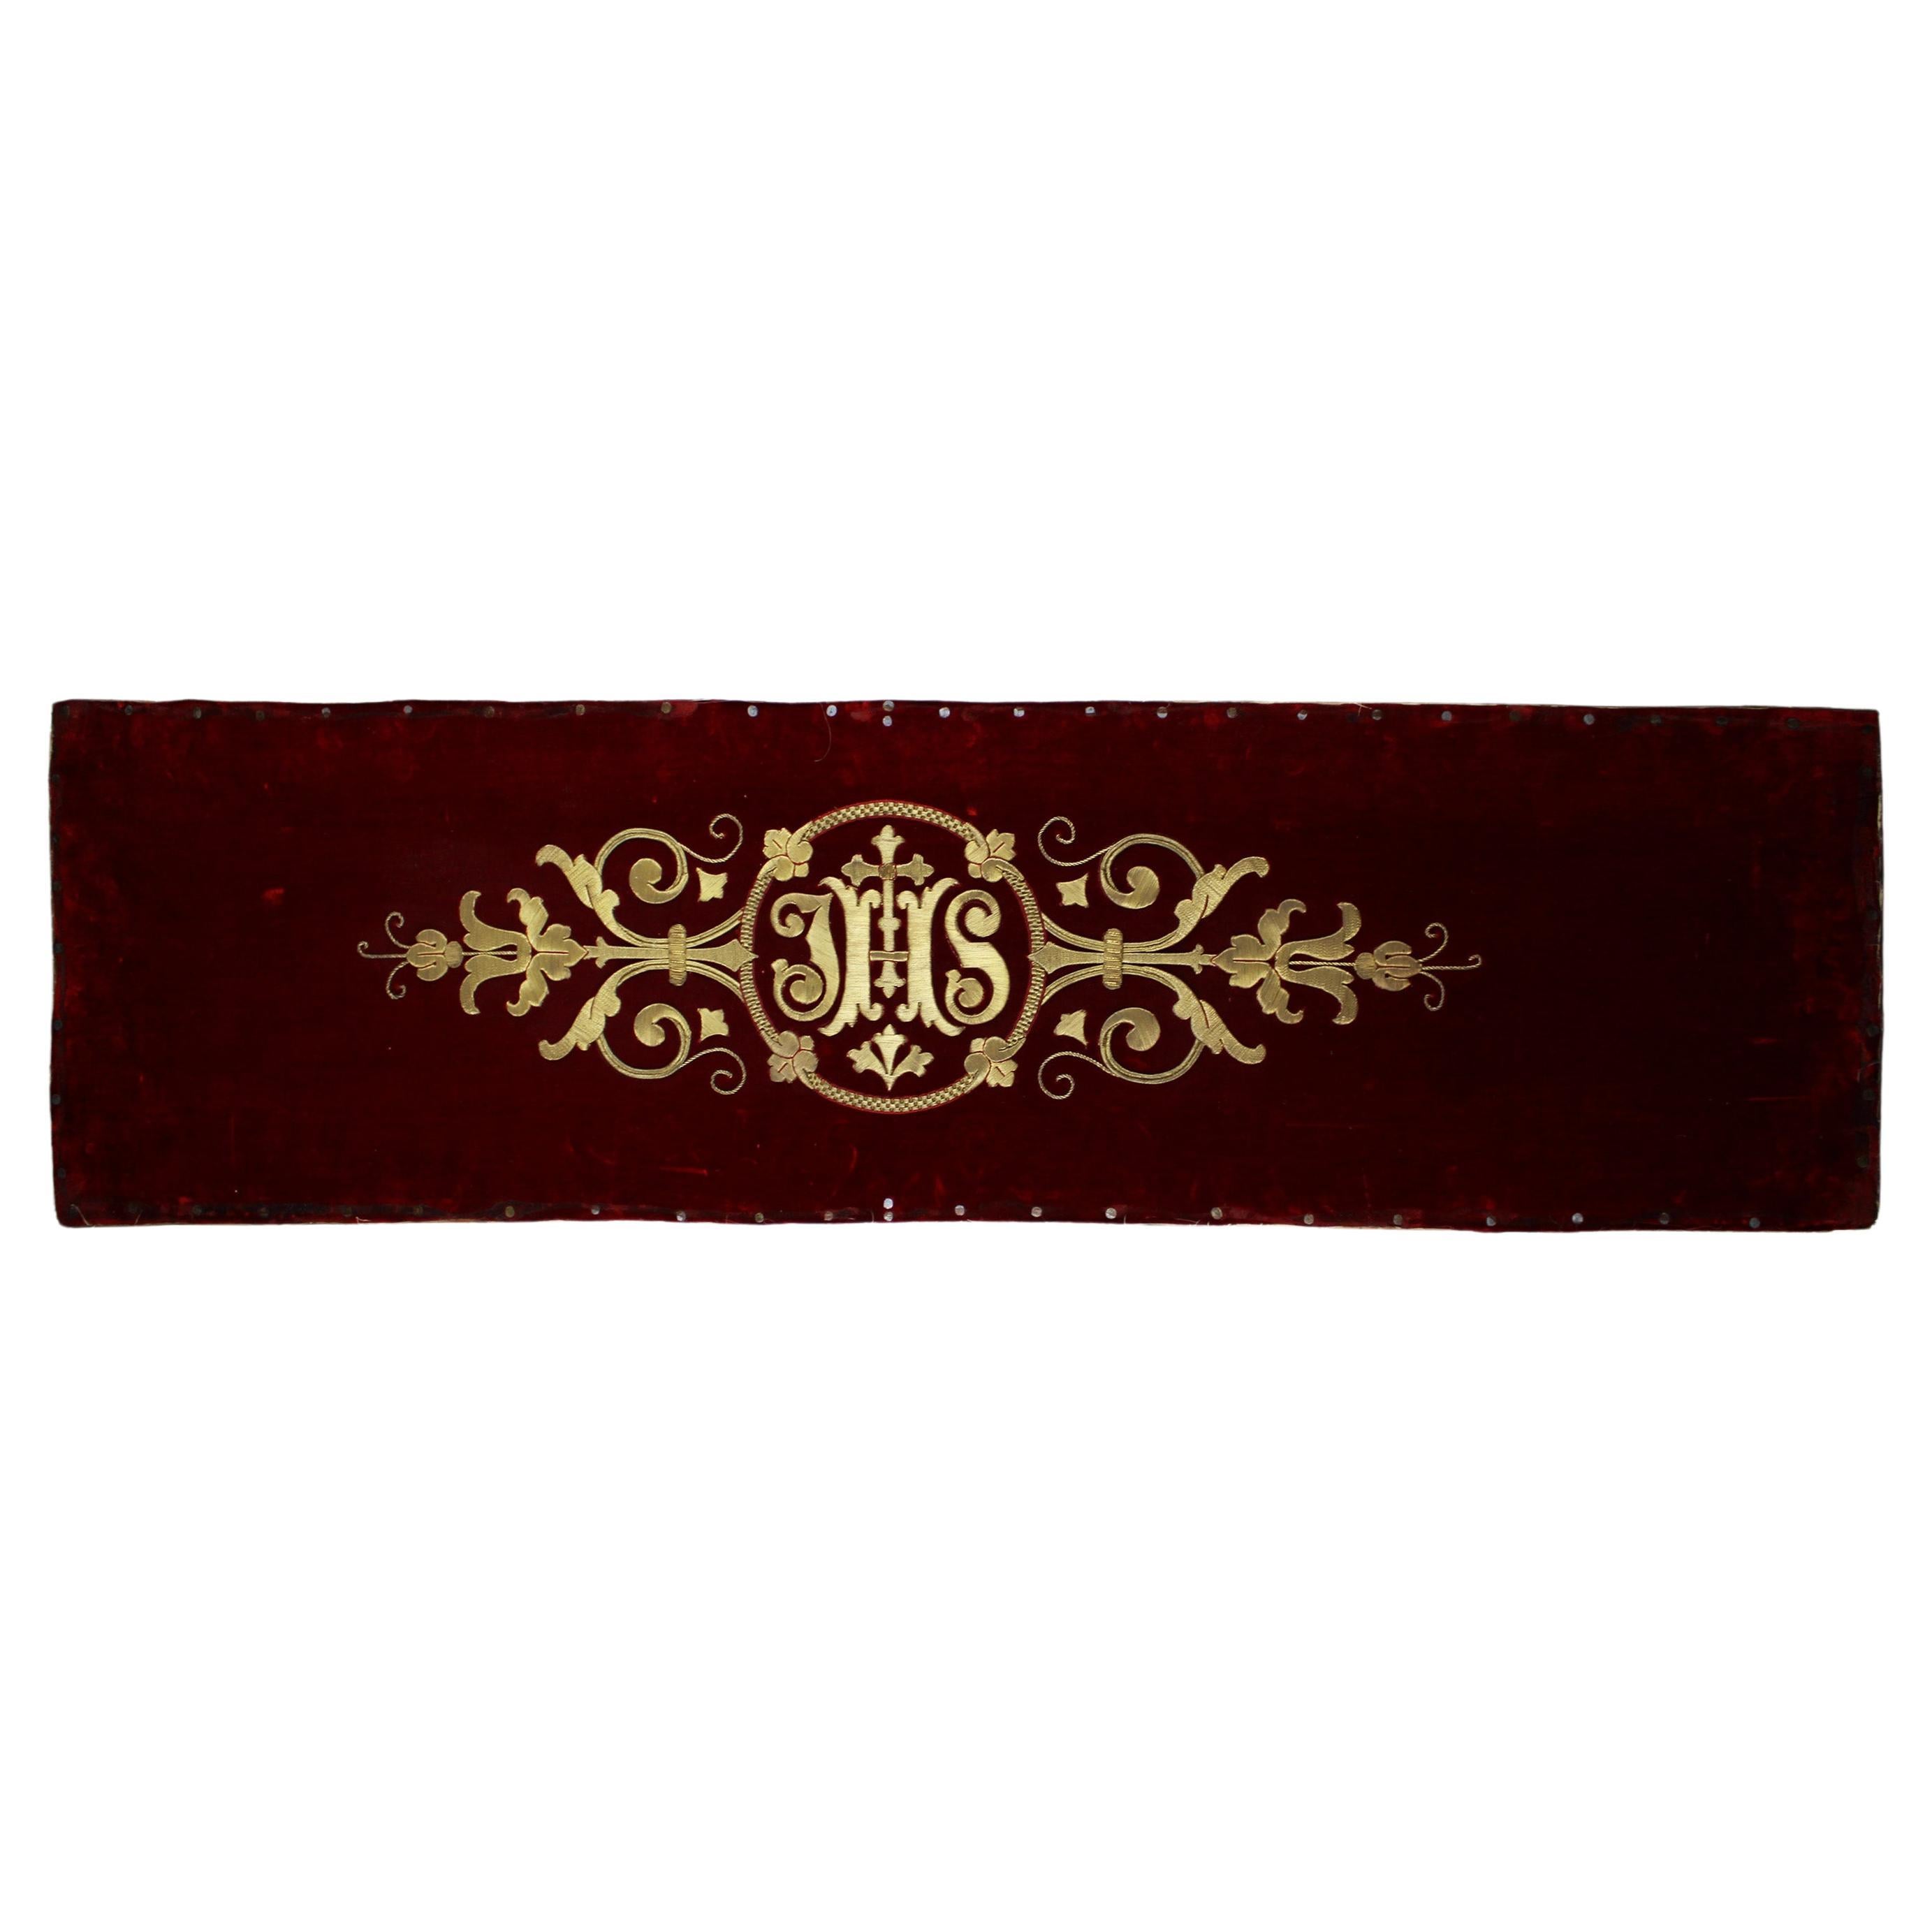 19th century raised gold work embroidery liturgical on red silk velvet Belgium